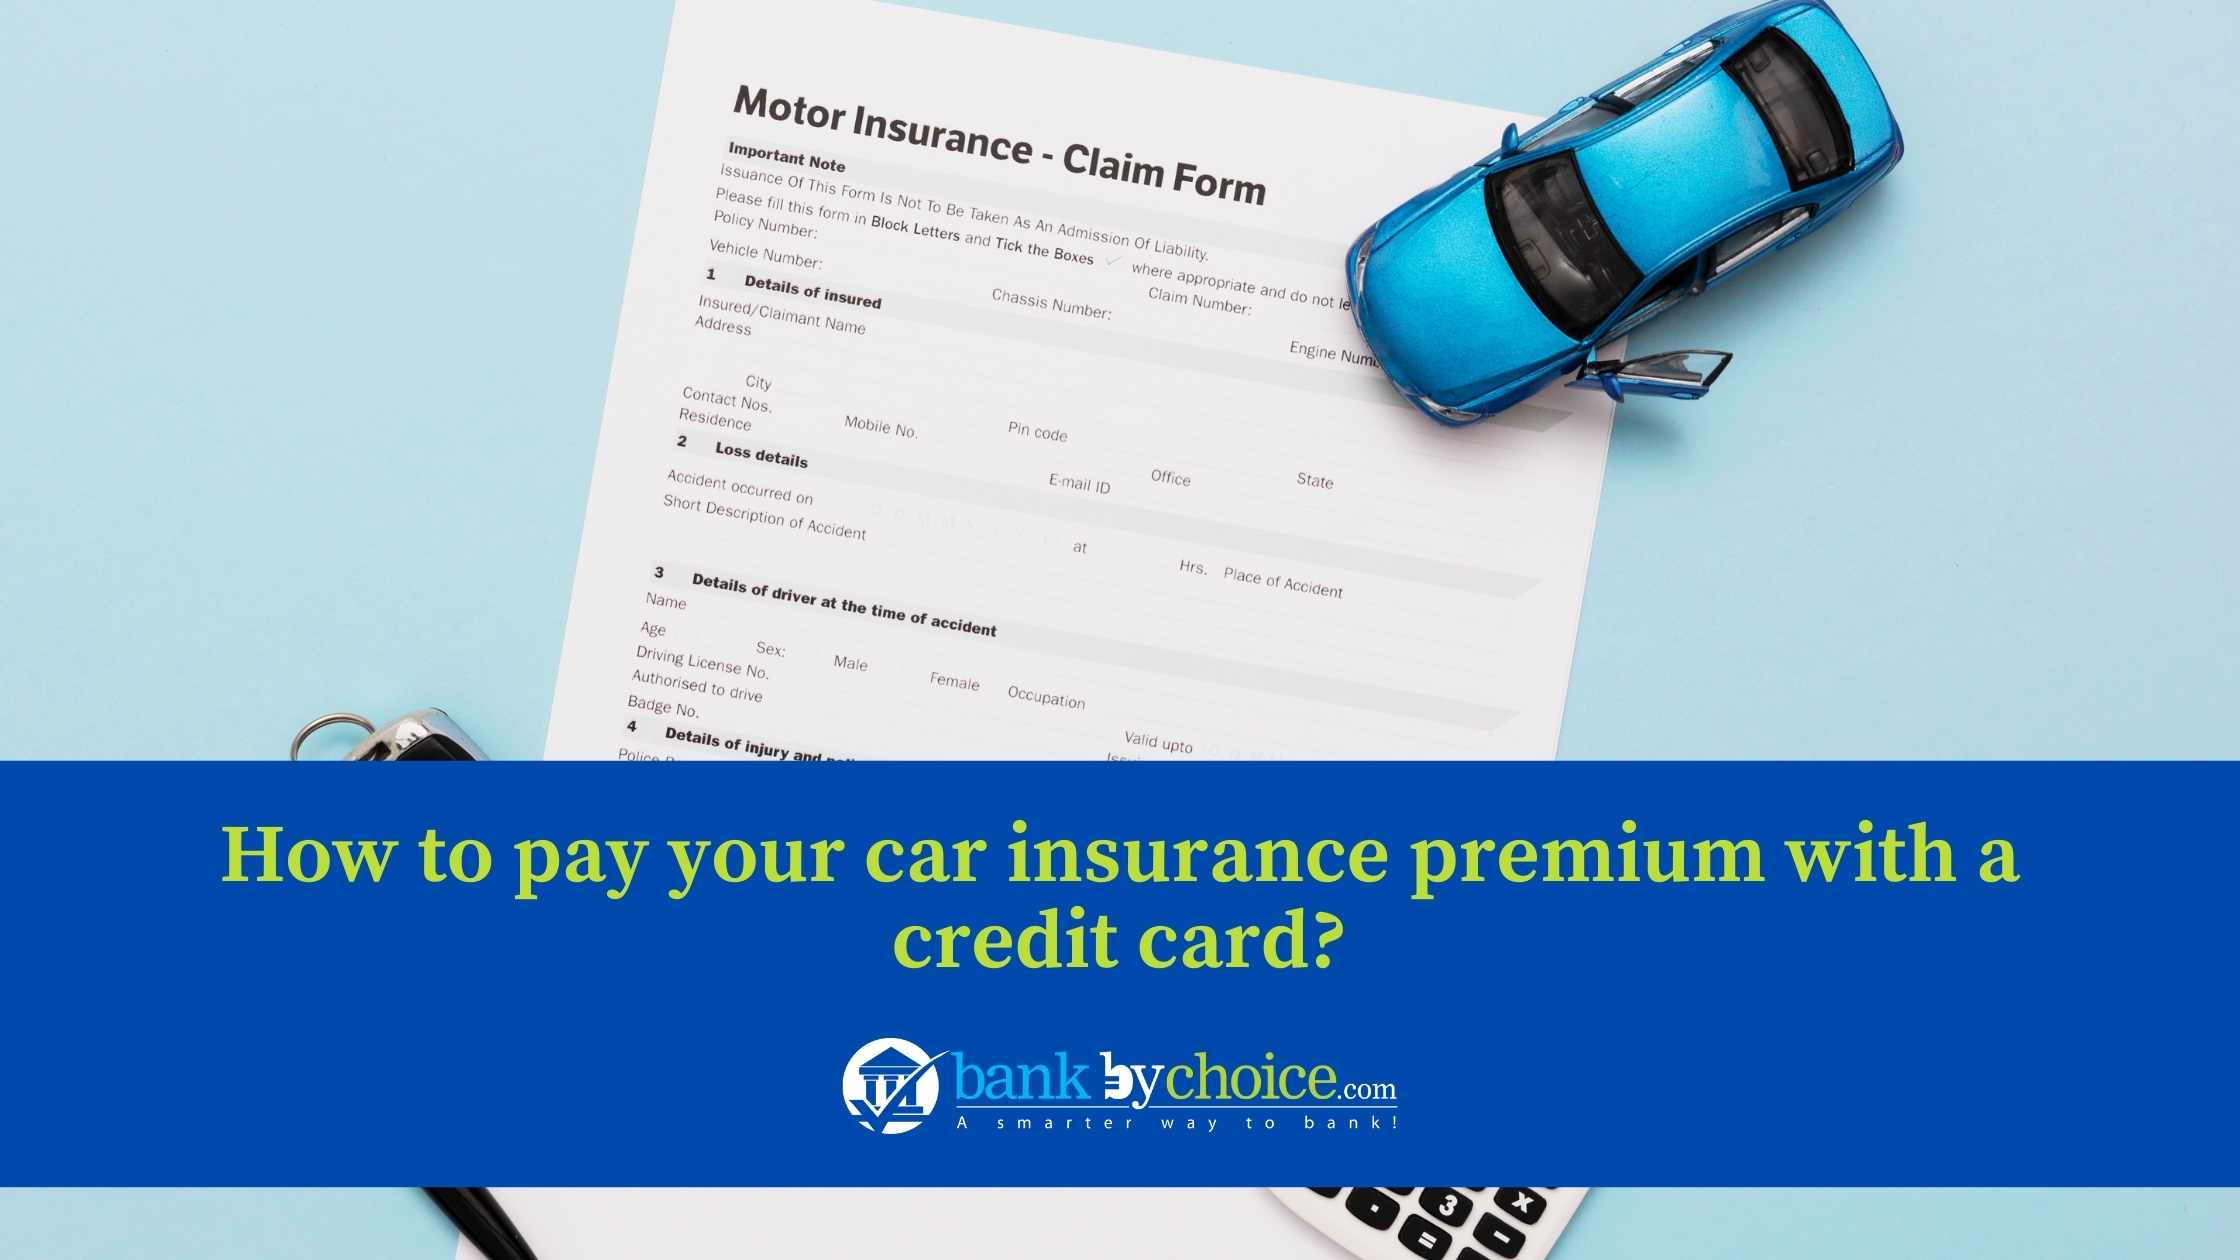 Car Insurance in UAE- Bankbychoice